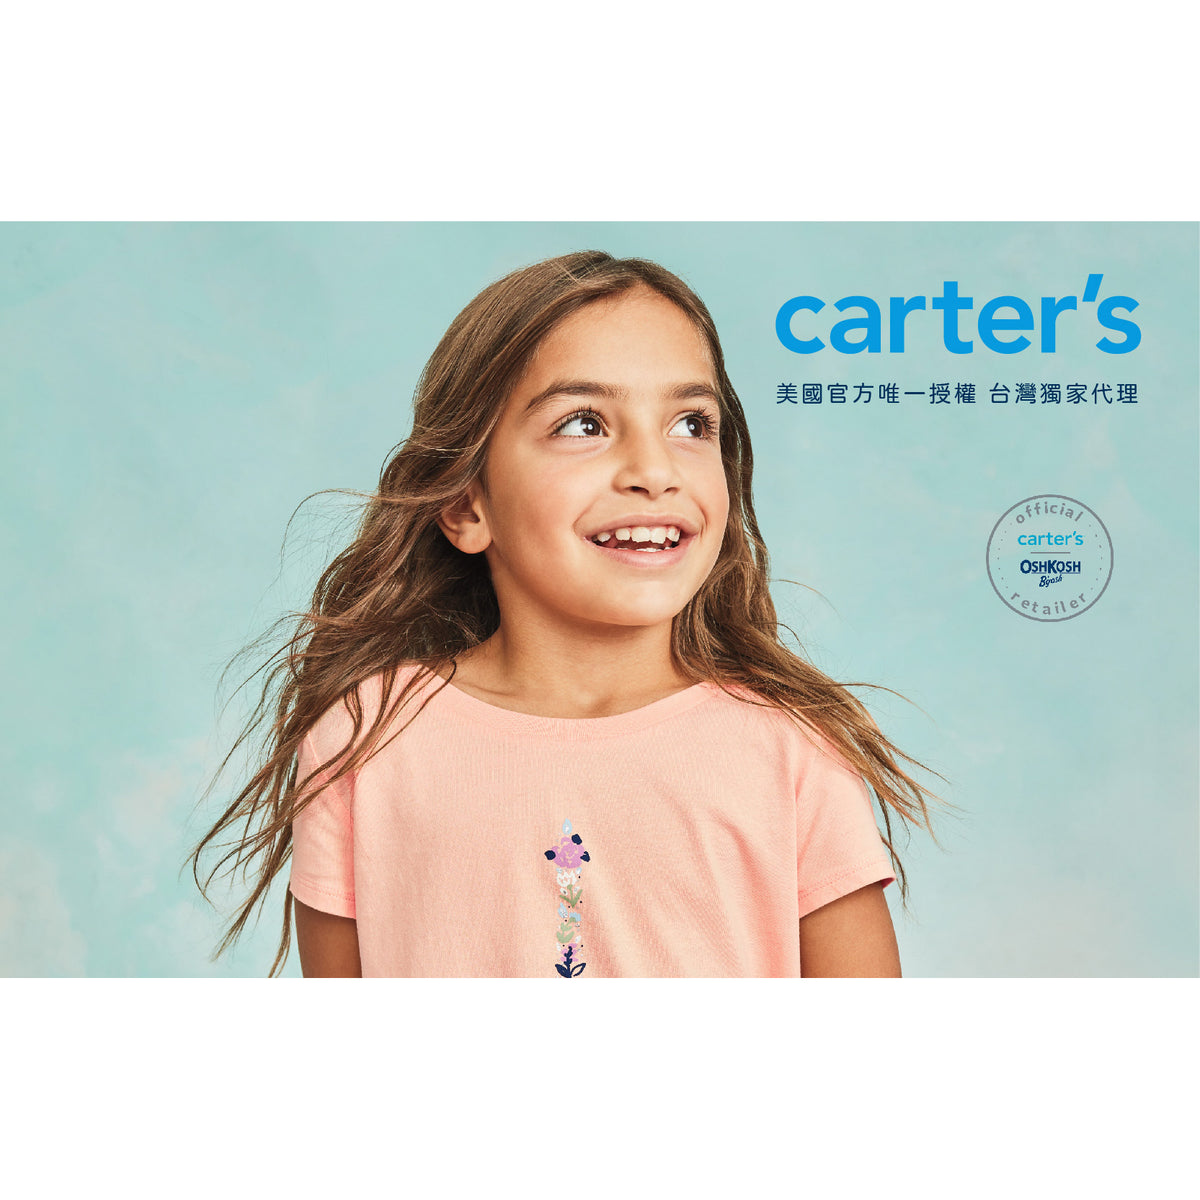 Carter's 白色蝴蝶結上衣(6-8)